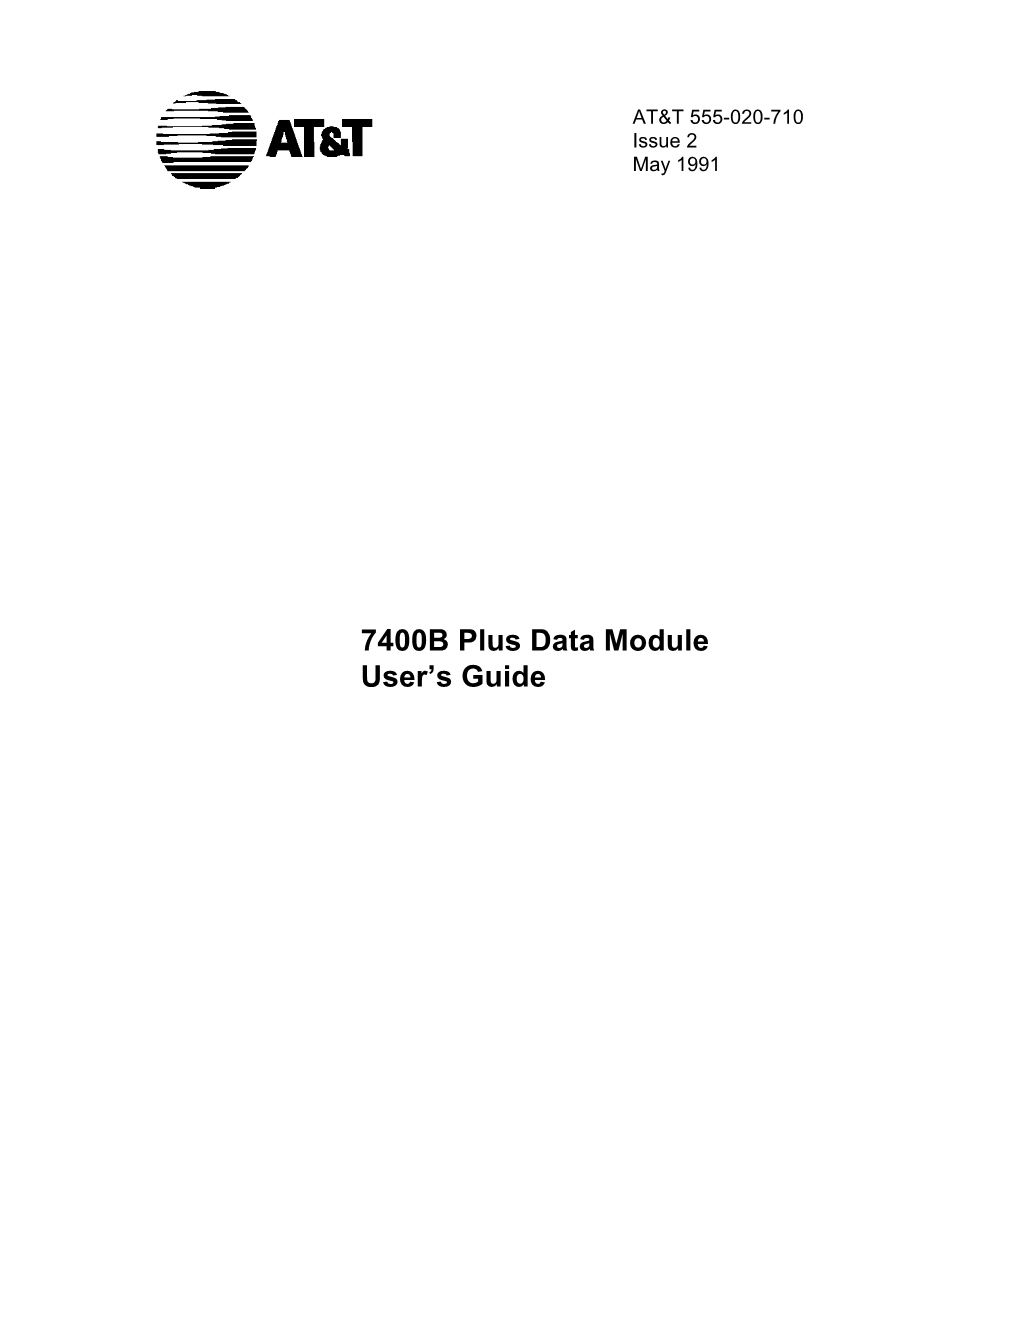 7400B Plus Data Module User's Guide